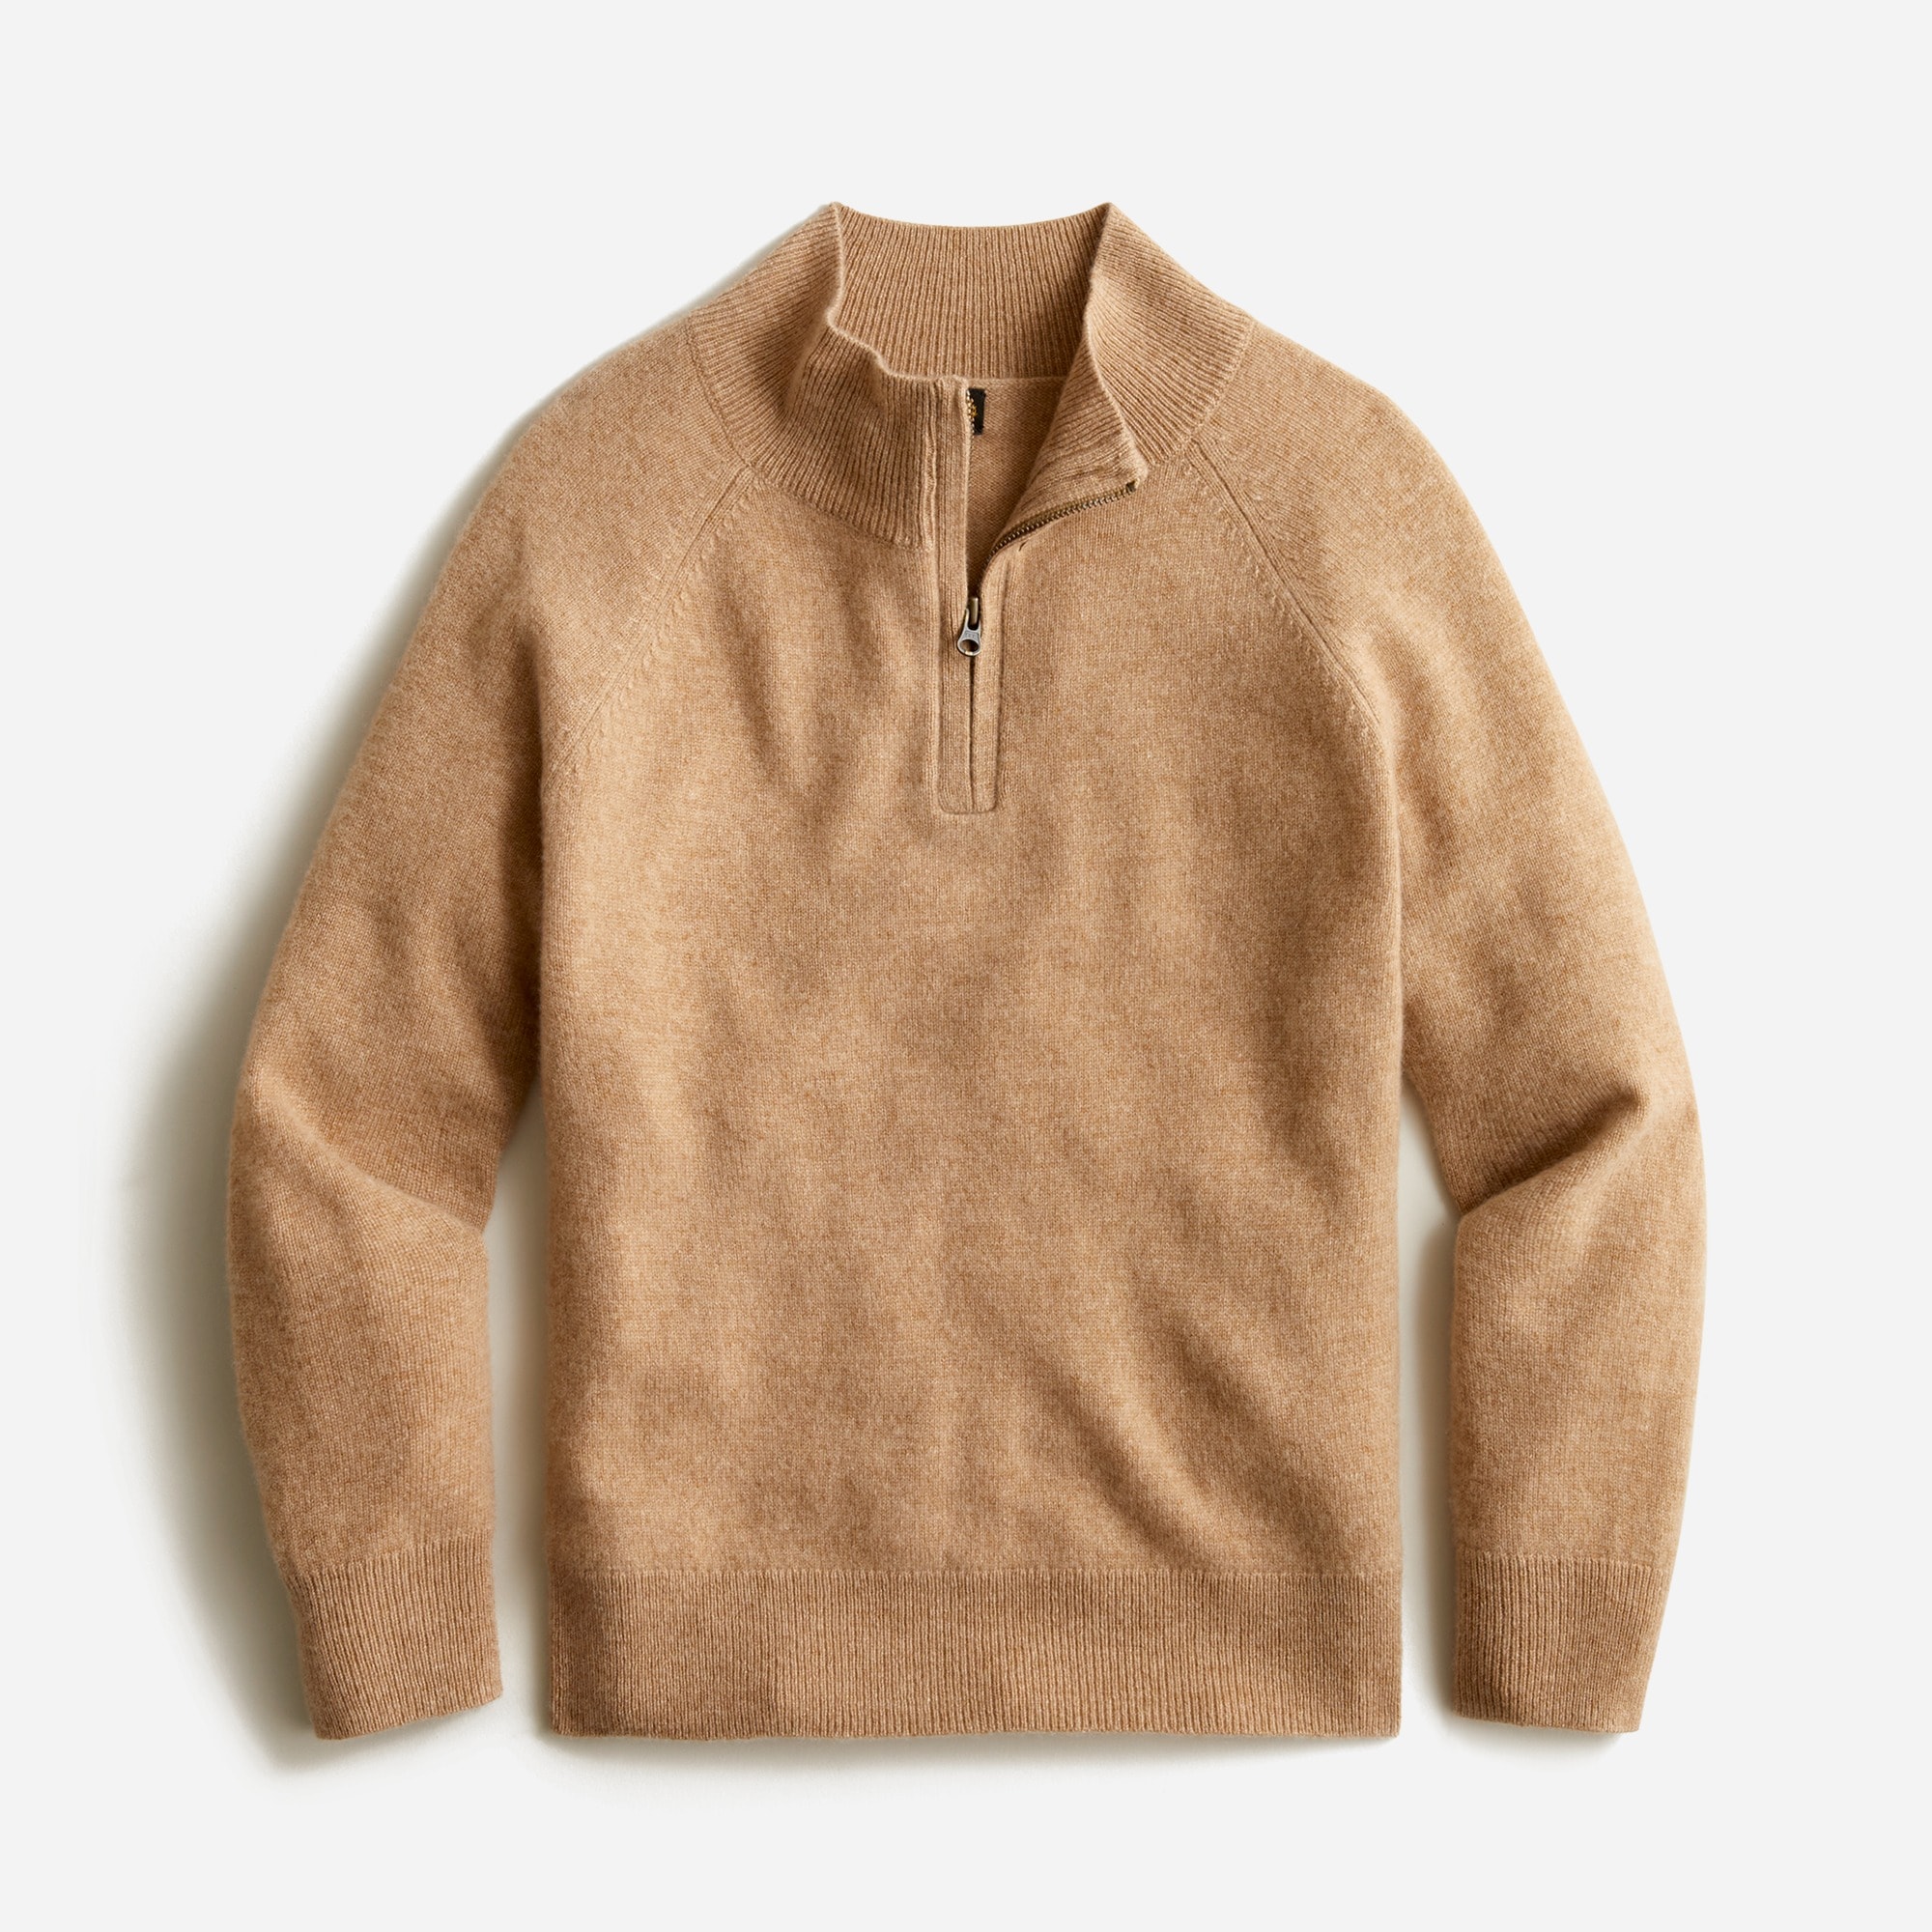  Kids' cashmere half-zip sweater